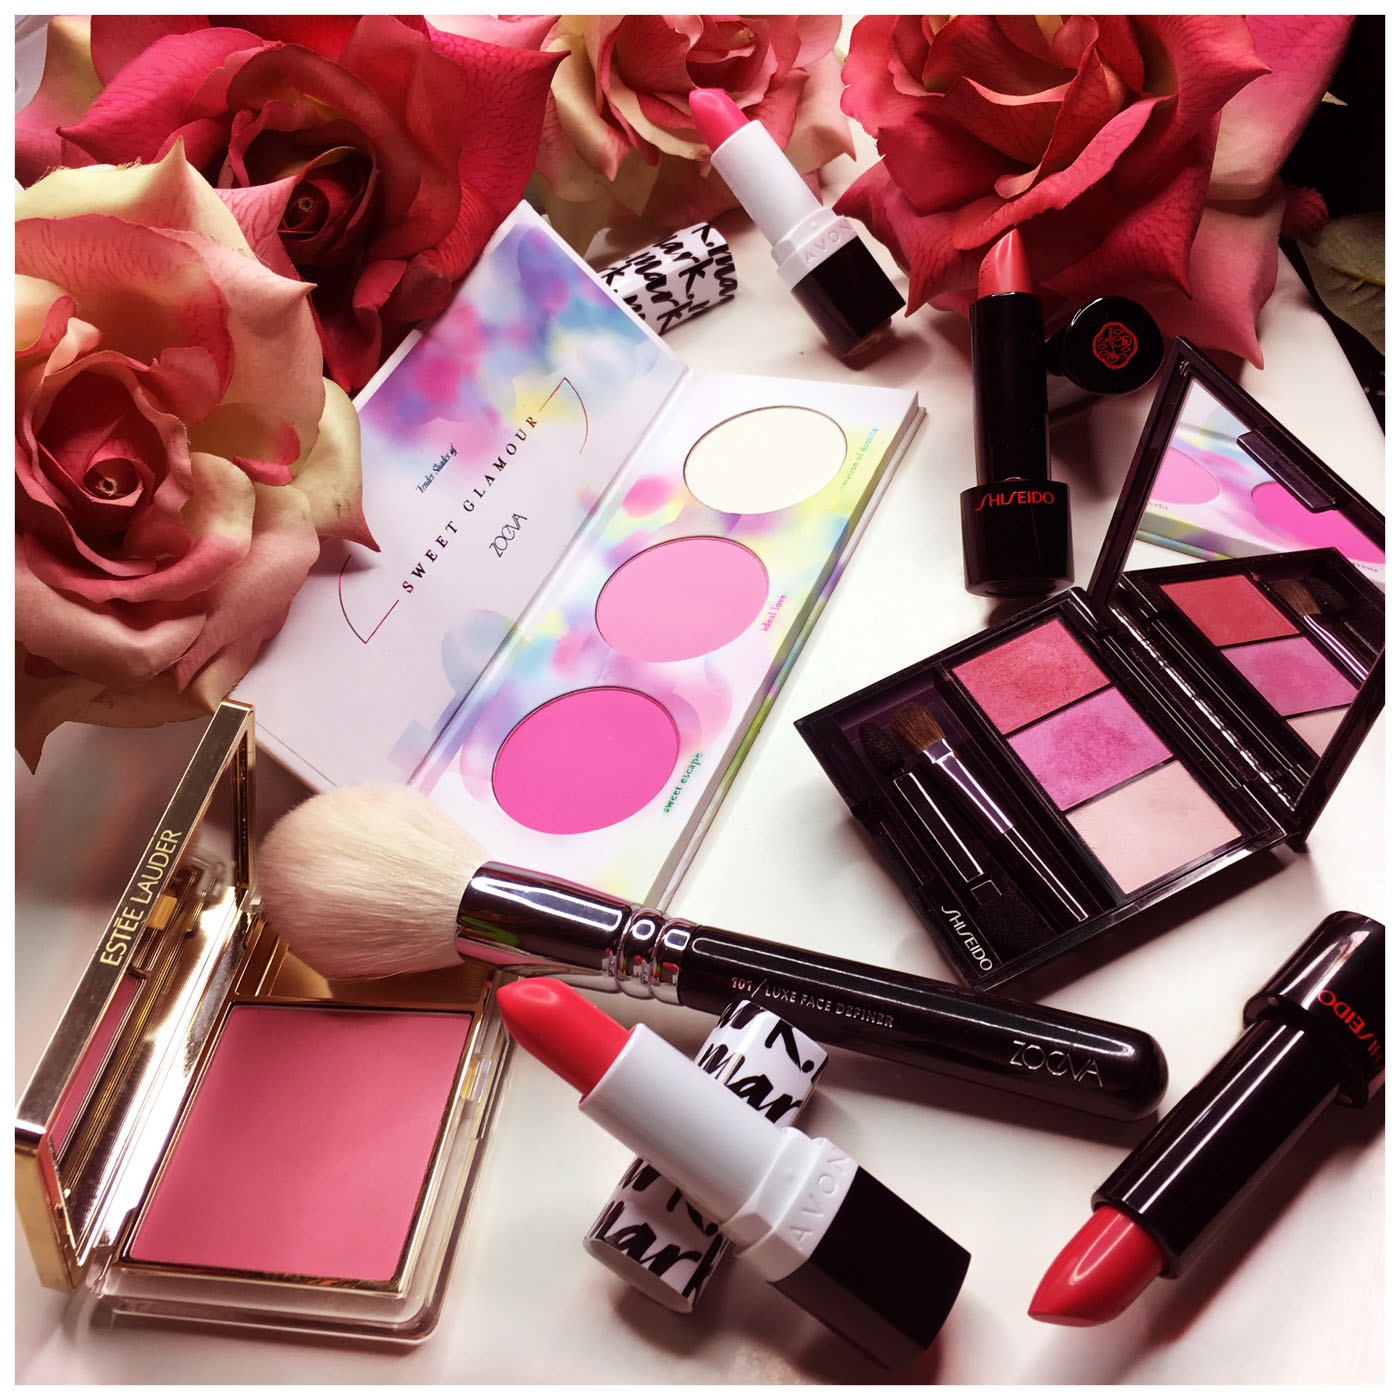 pink palette zoeva blush esteelauder shiseido shimering trio mark avon lipstick rougerouge rd305 rd310 peonypop starburstpink luminizing satin eyecolor